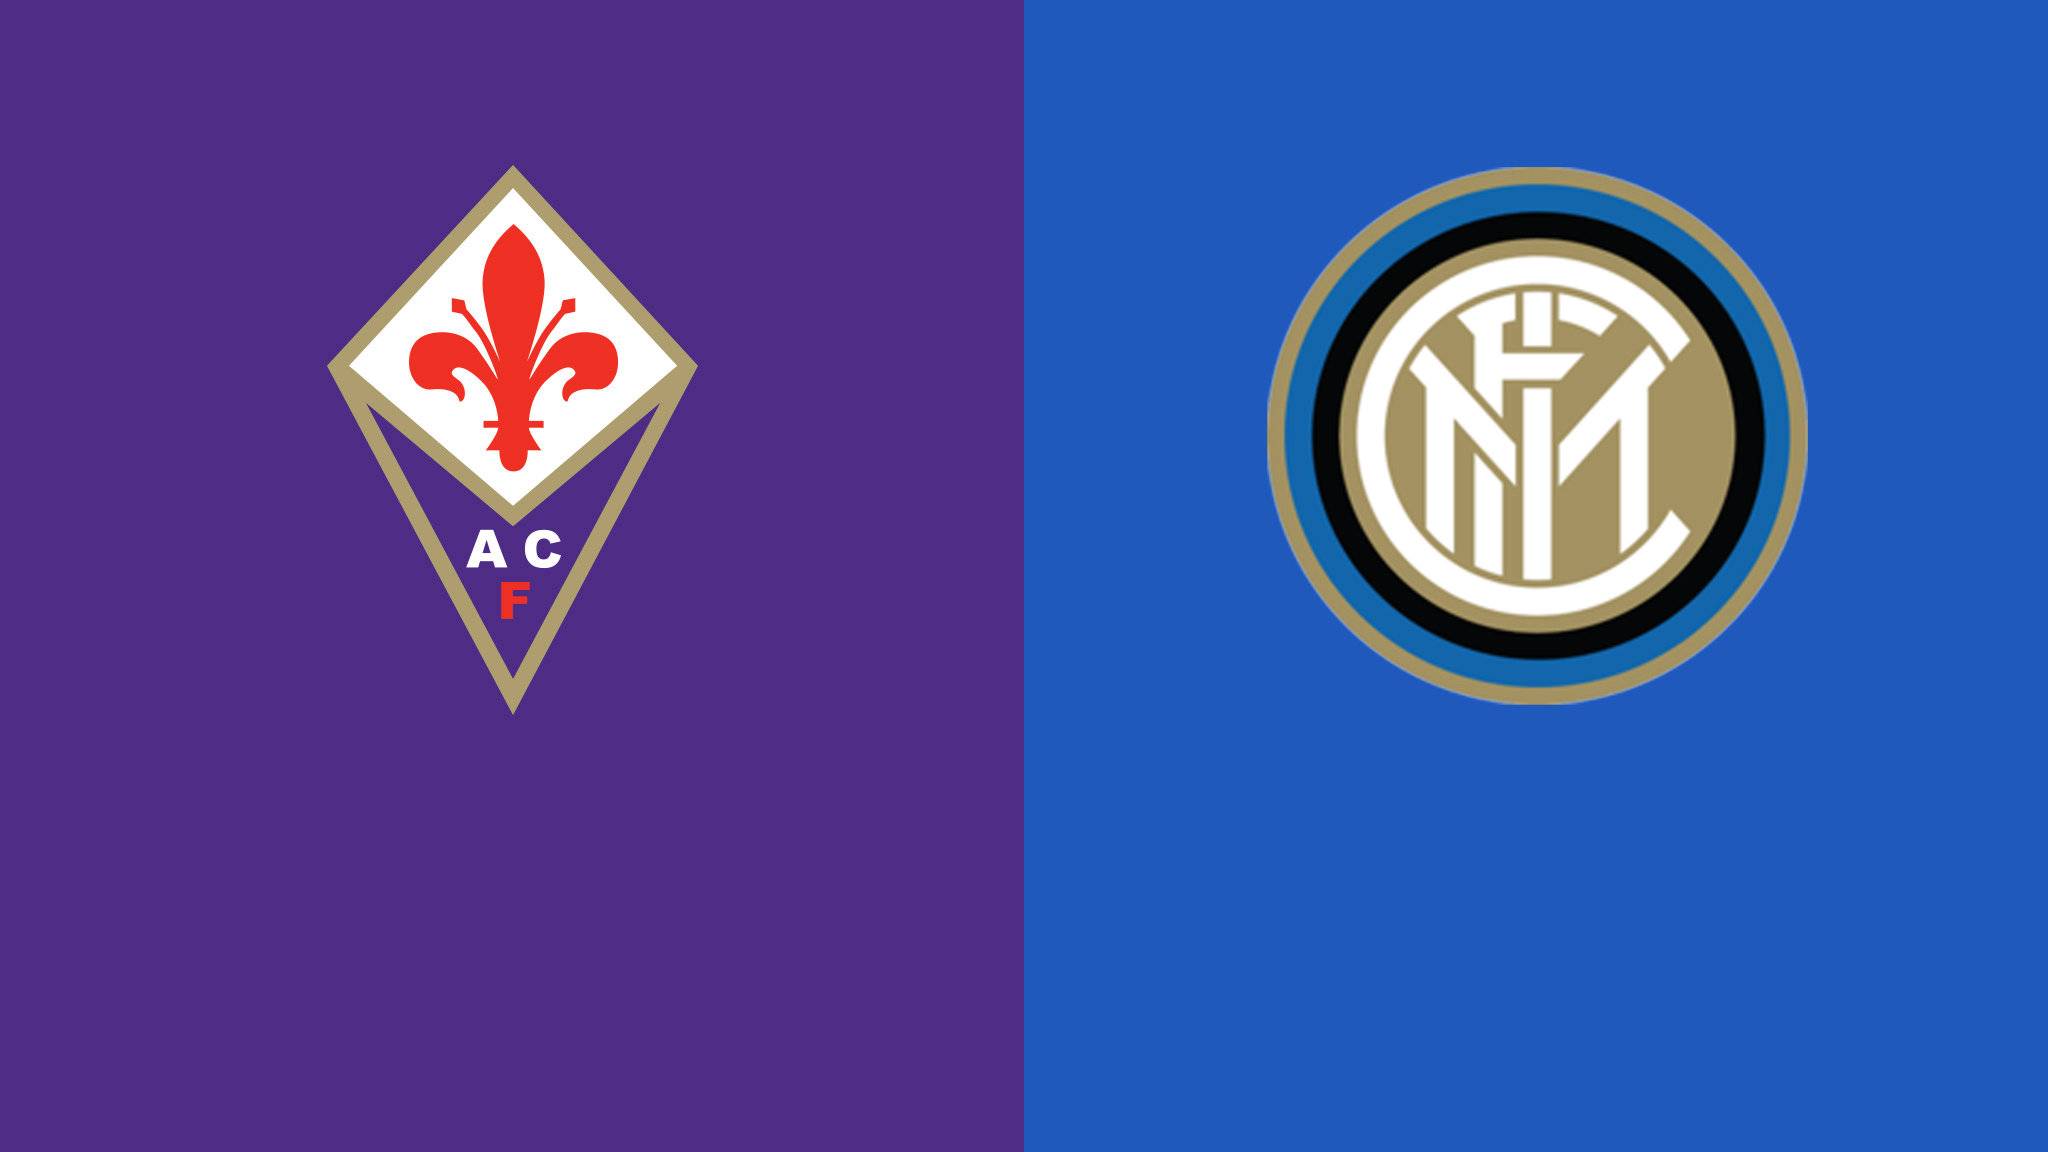 Serie A: Inter Milan defeats Fiorentina away to go top of the Serie A table